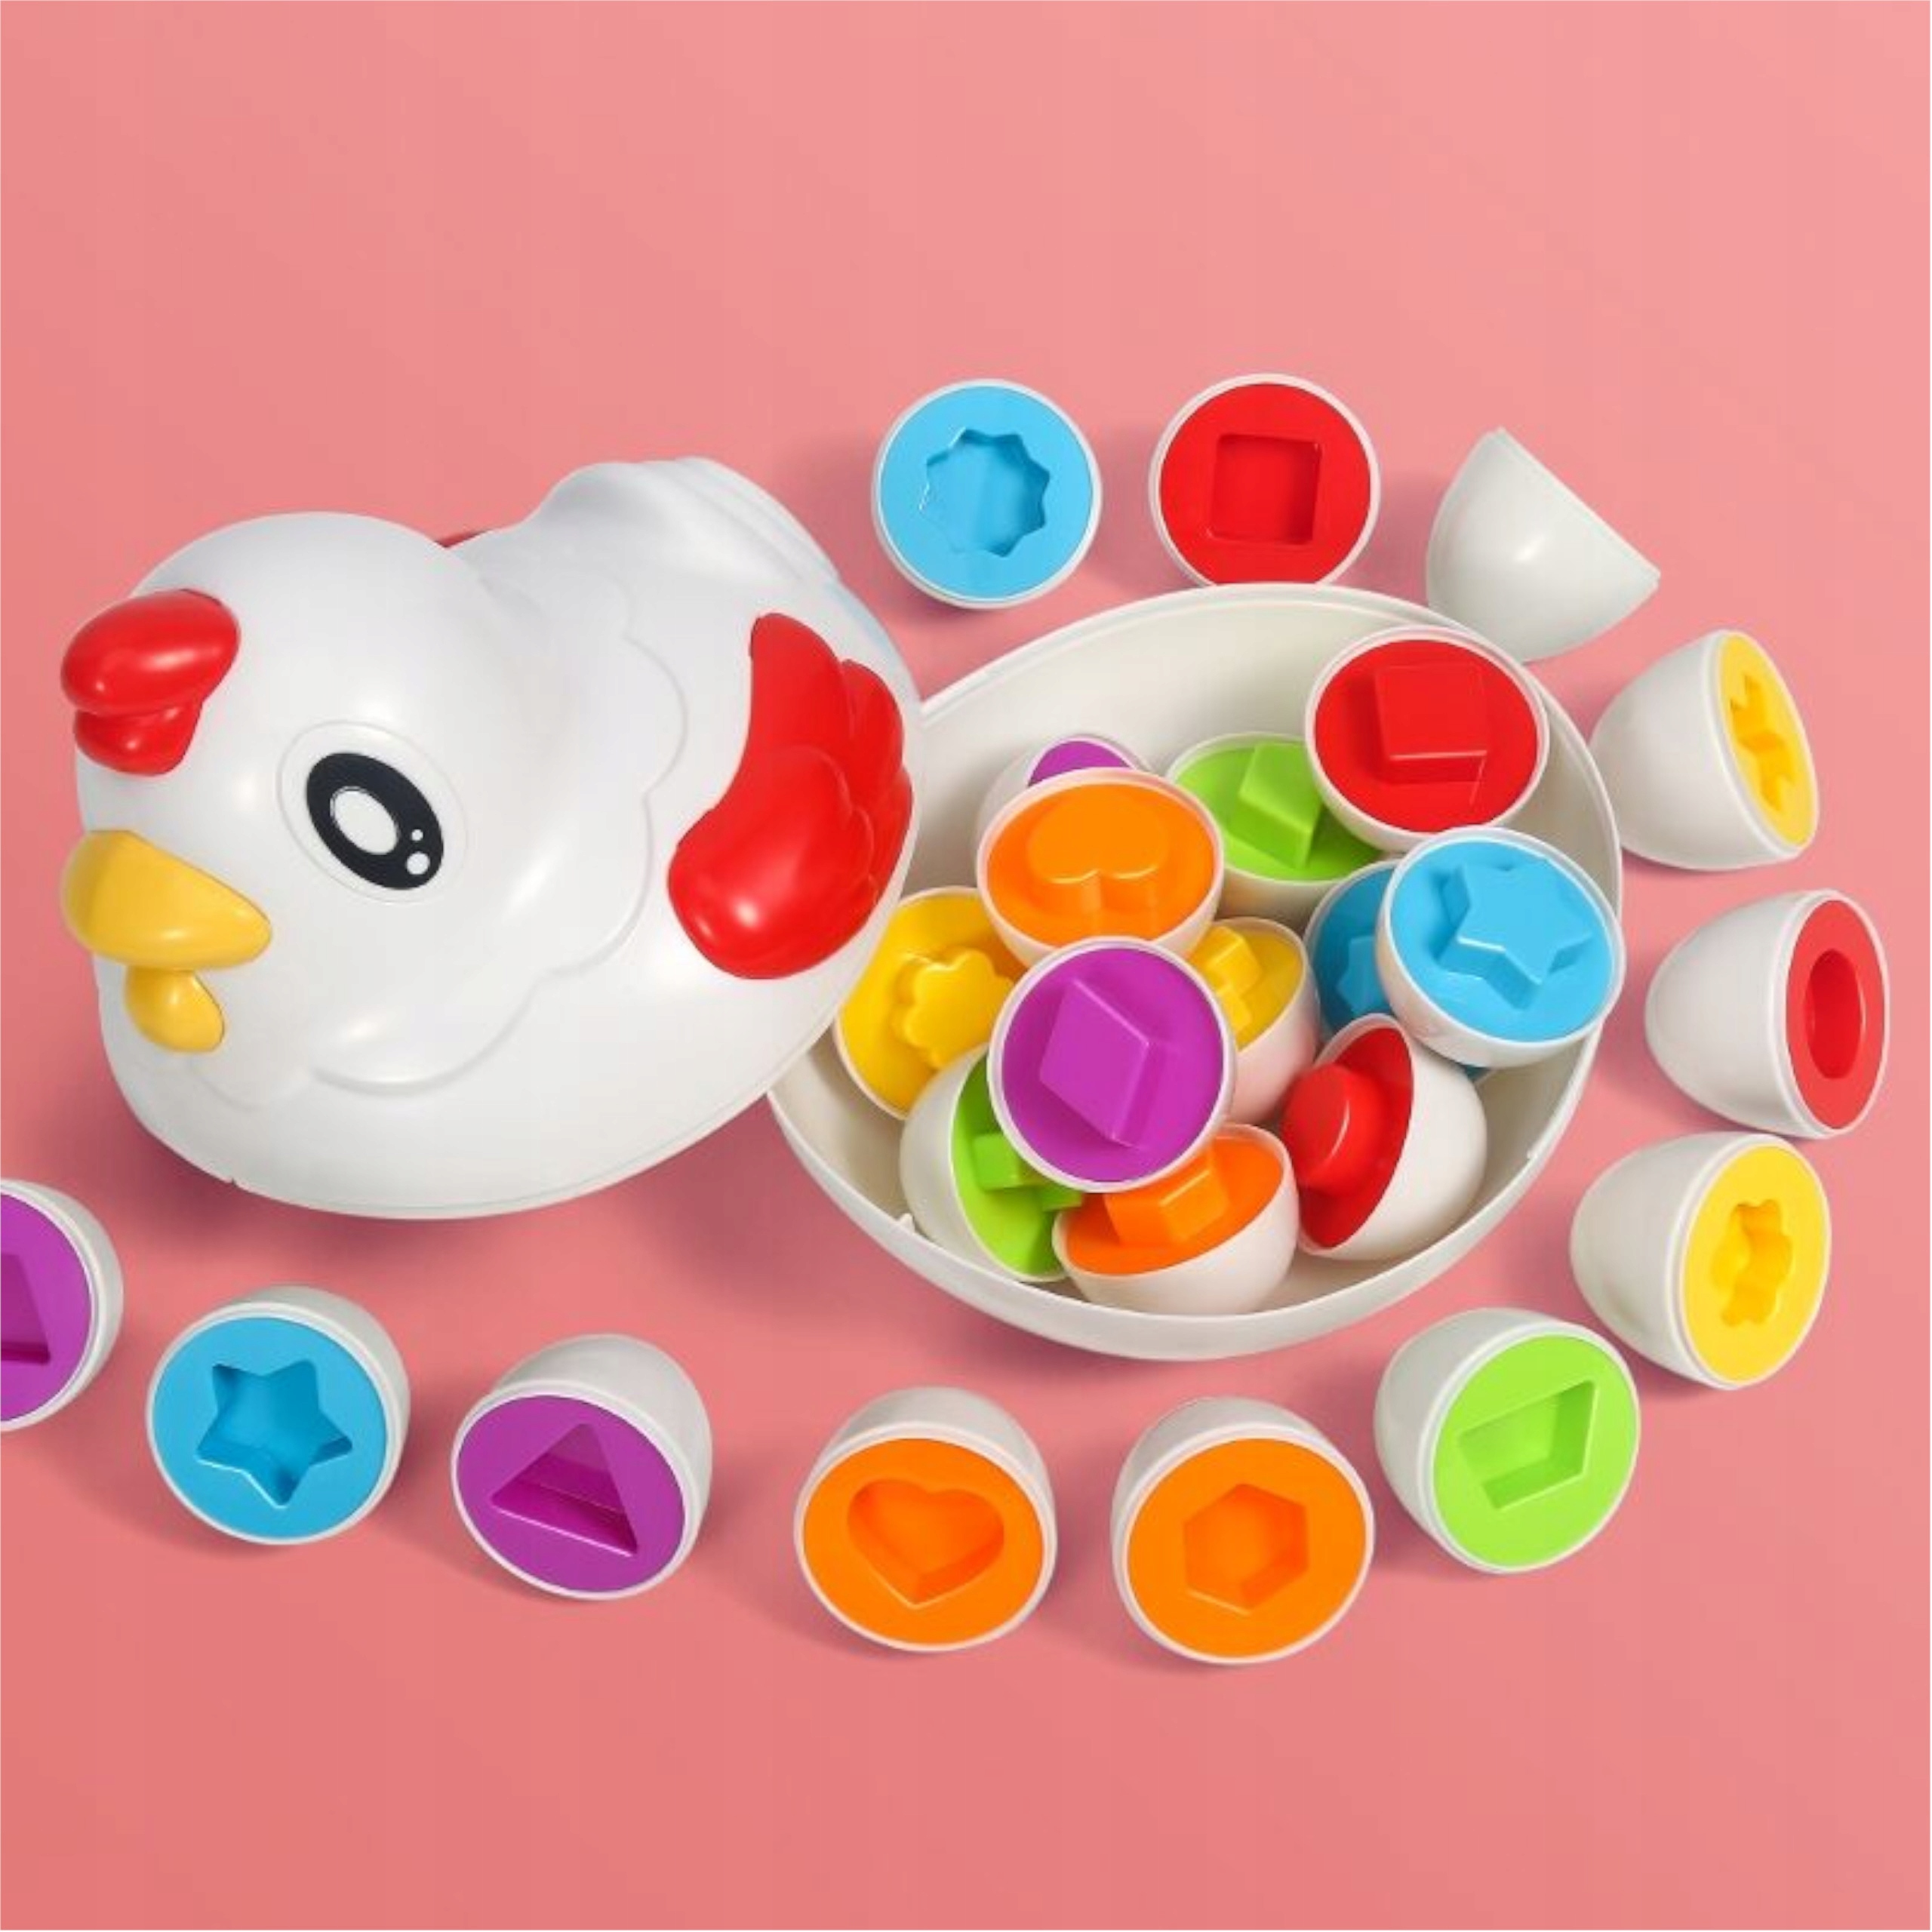 Układanka sorter jajka Montessori kolory DF18 Kolor dominujący biel